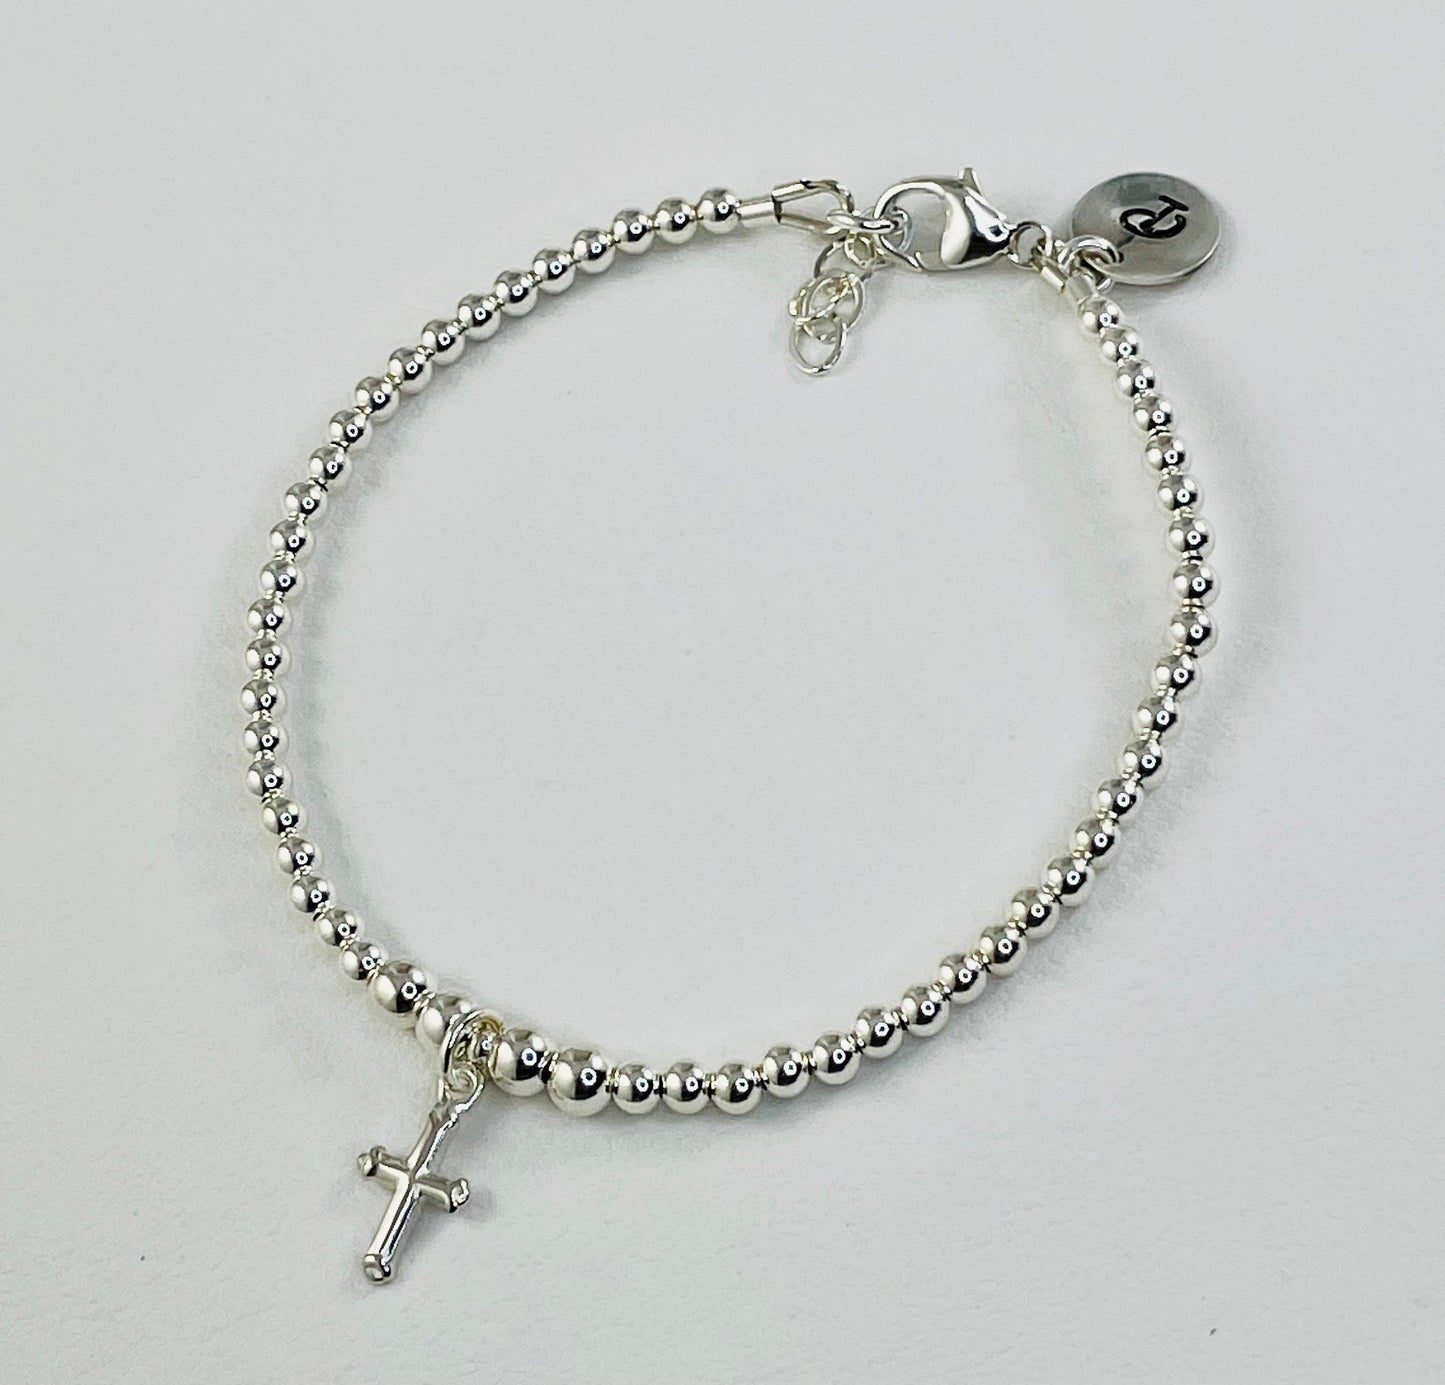 Solid Sterling Silver Cross Bracelet,First Communion Bracelet,Confirmation Bracelet,Cross Bracelet Gift for women  girls baby girls friends